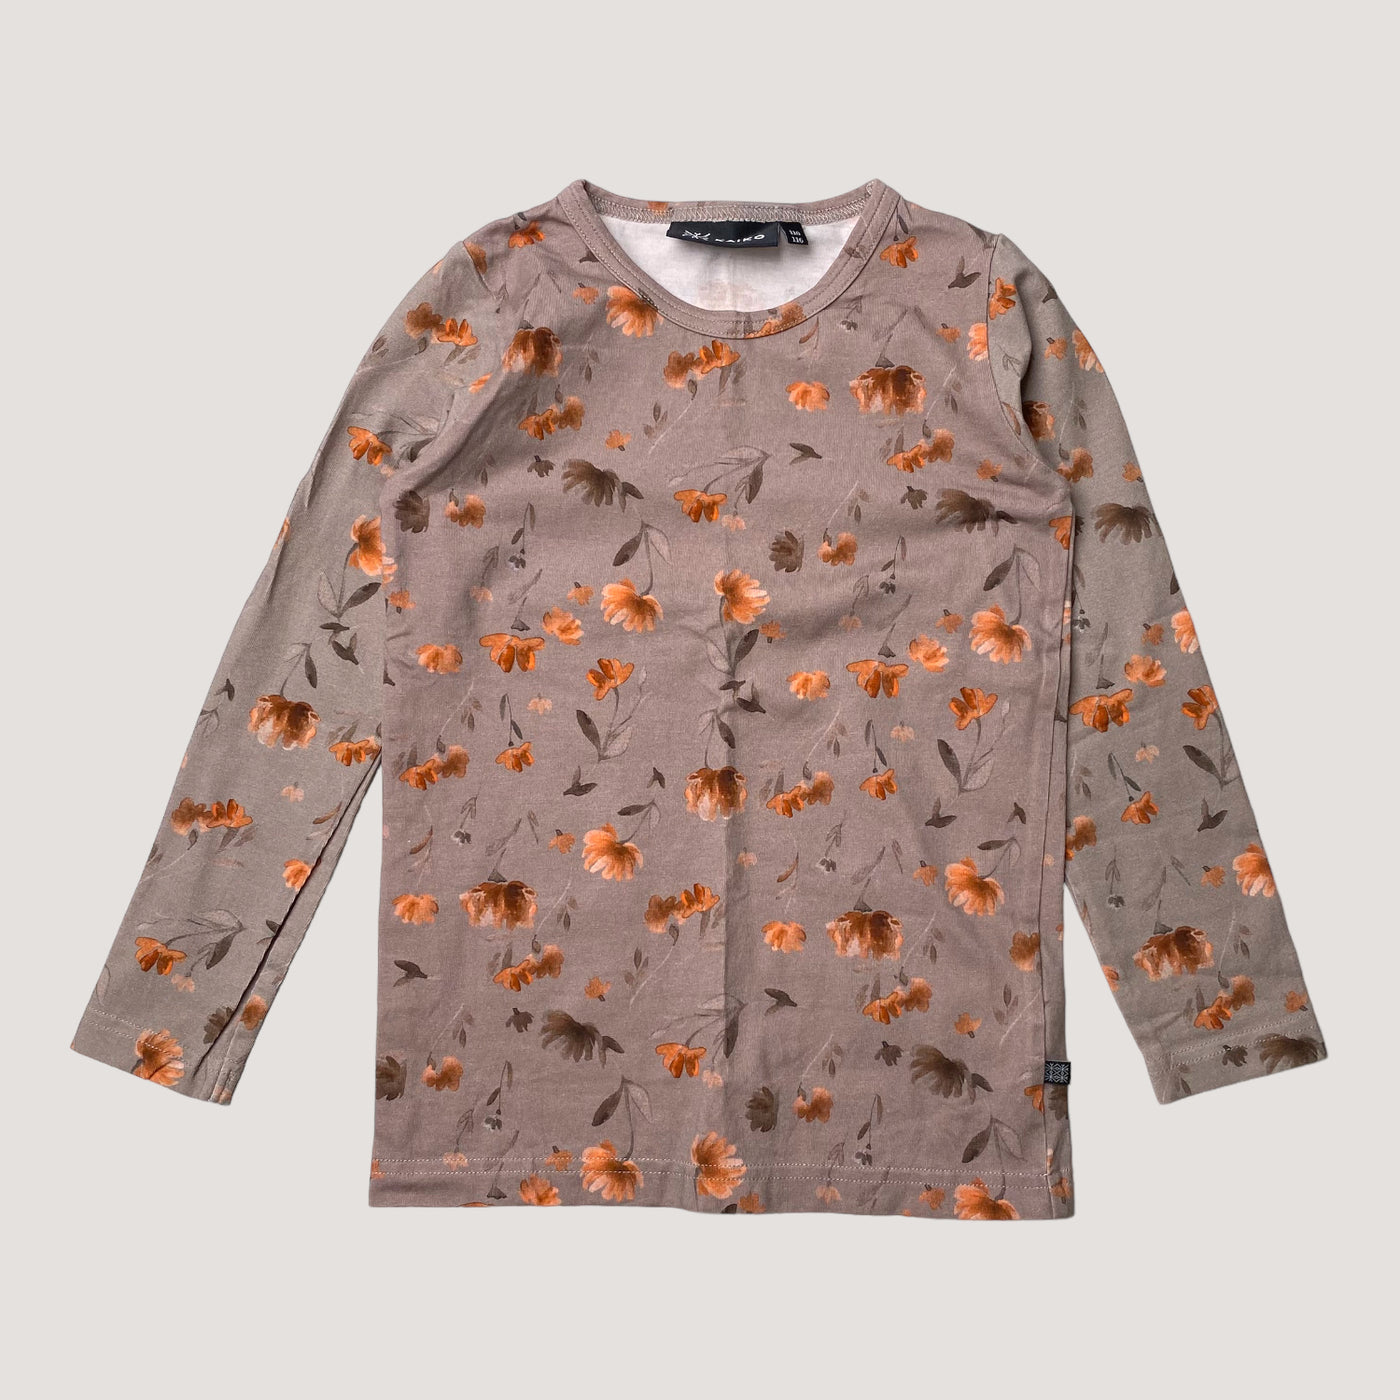 Kaiko shirt, poppy field | 110/116cm